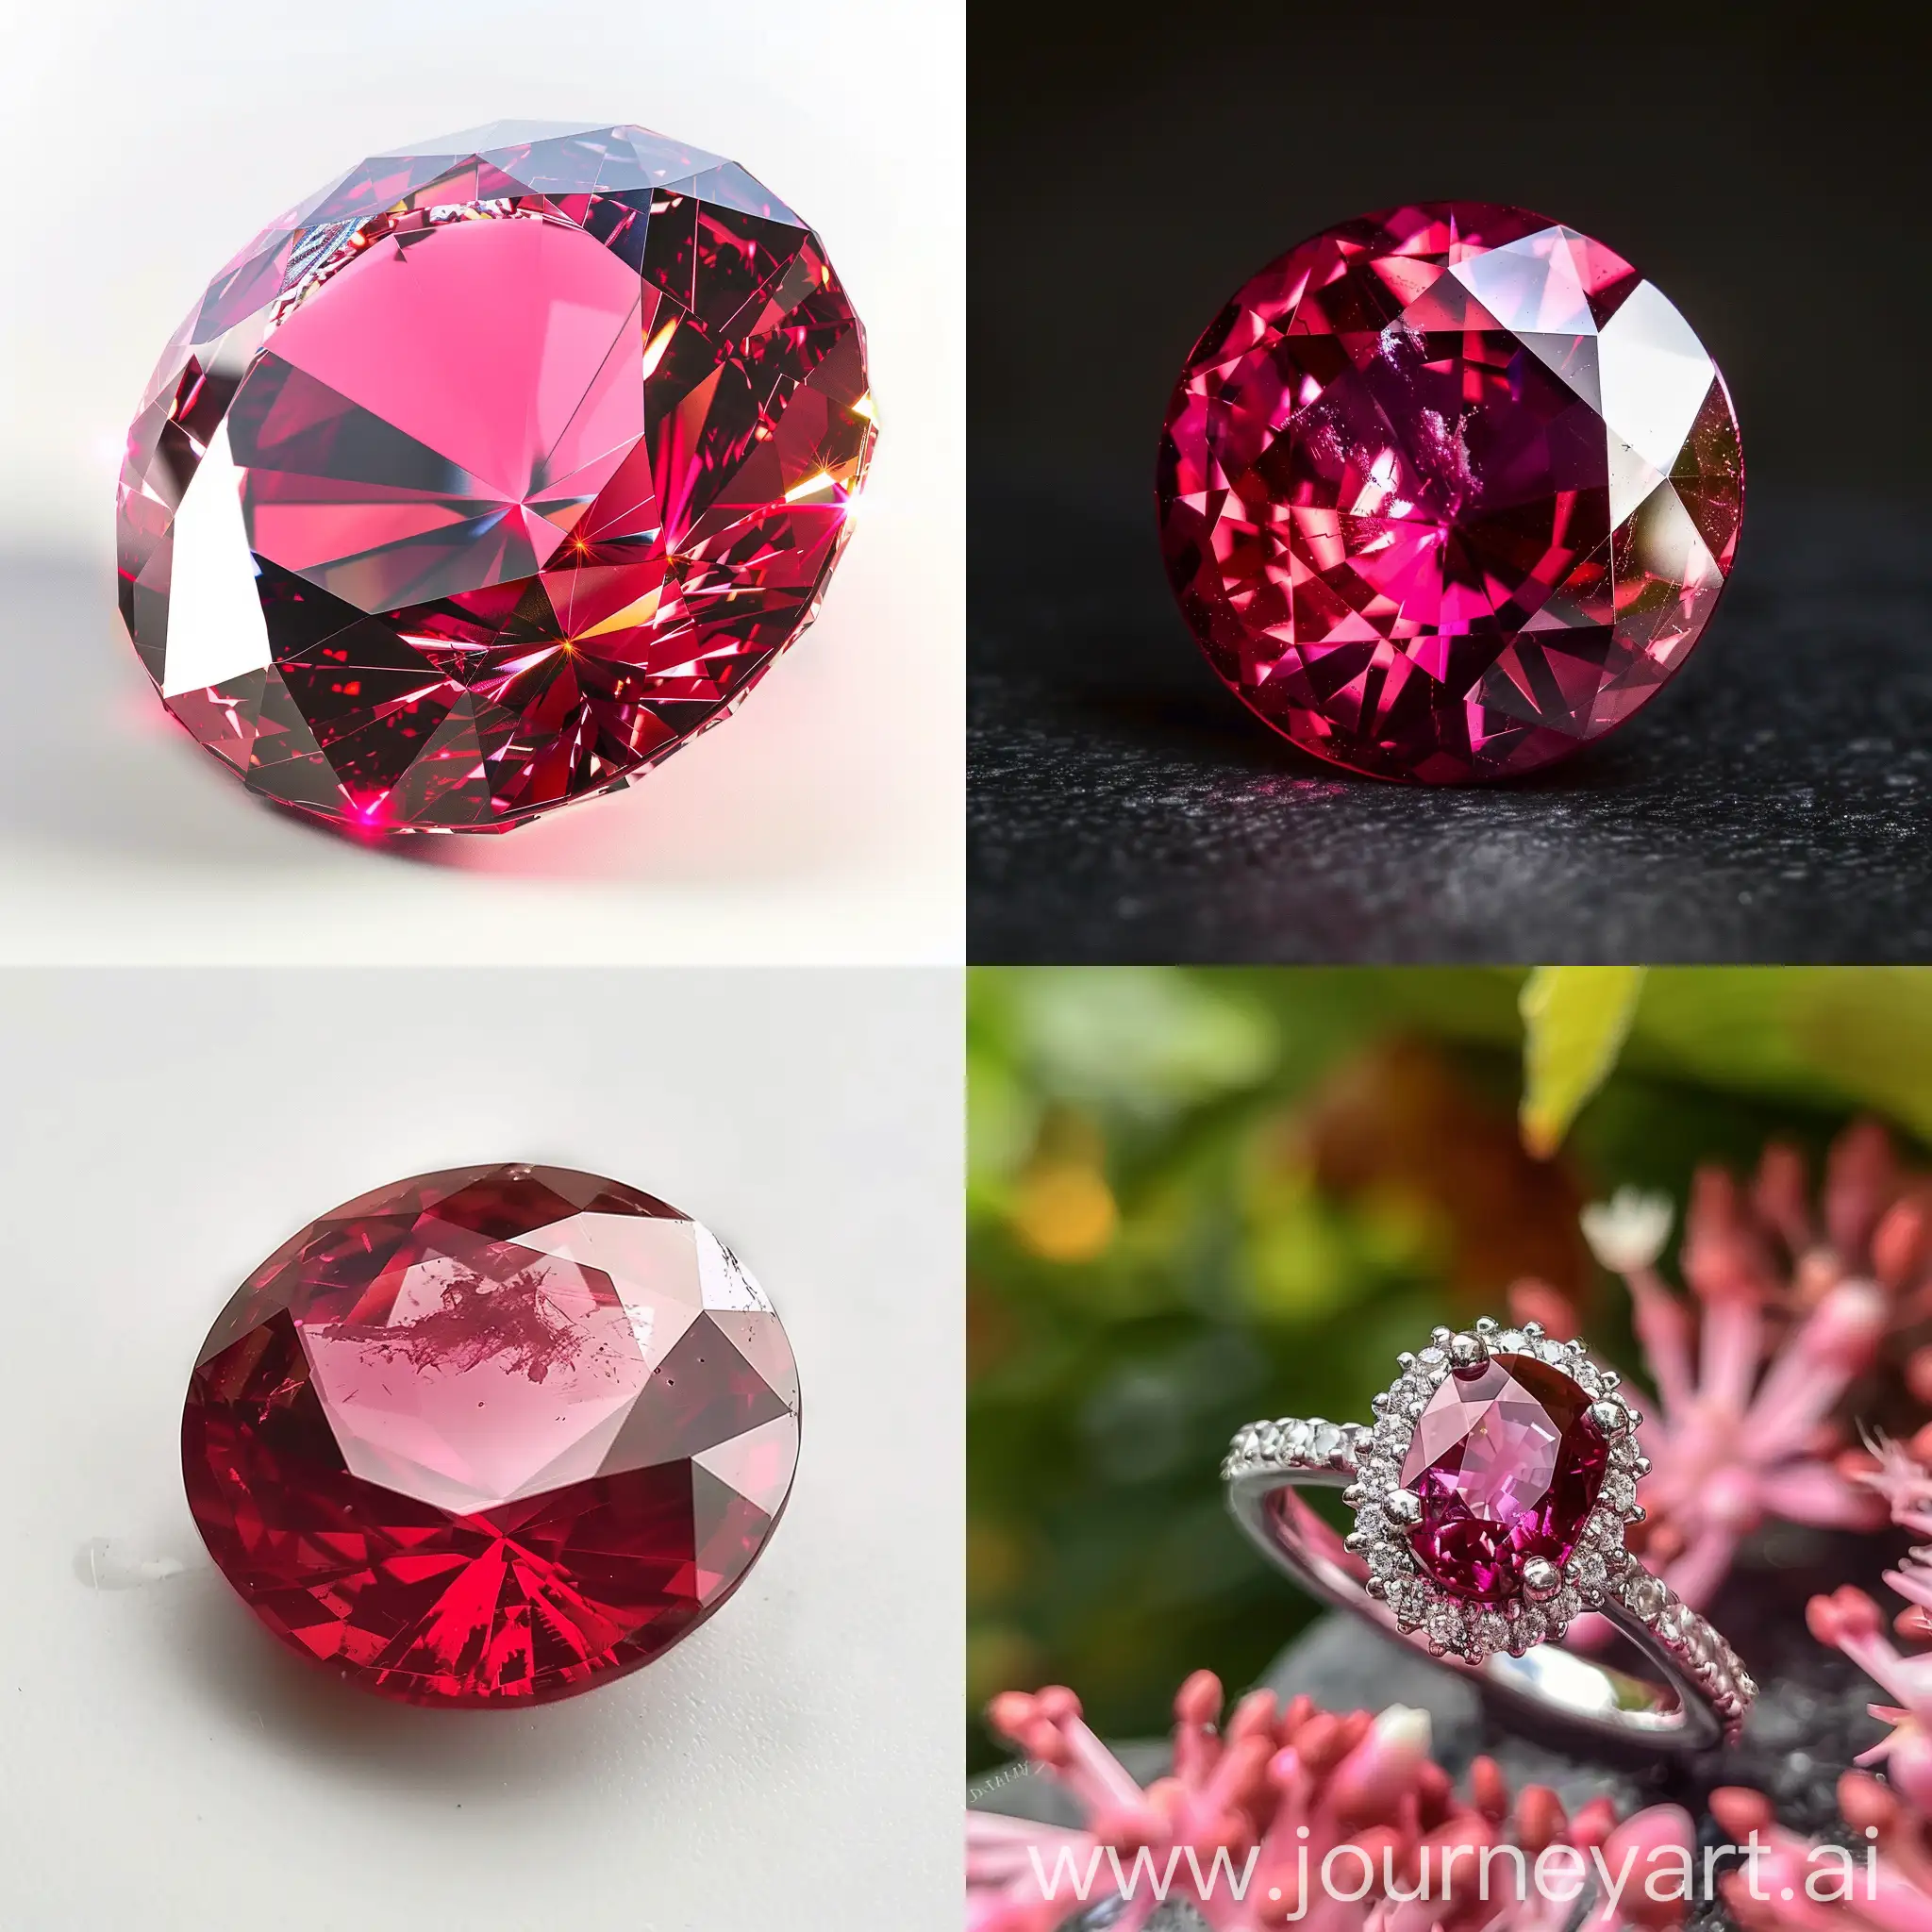 Vibrant-Ruby-Gemstone-in-a-11-Aspect-Ratio-Stunning-Artwork